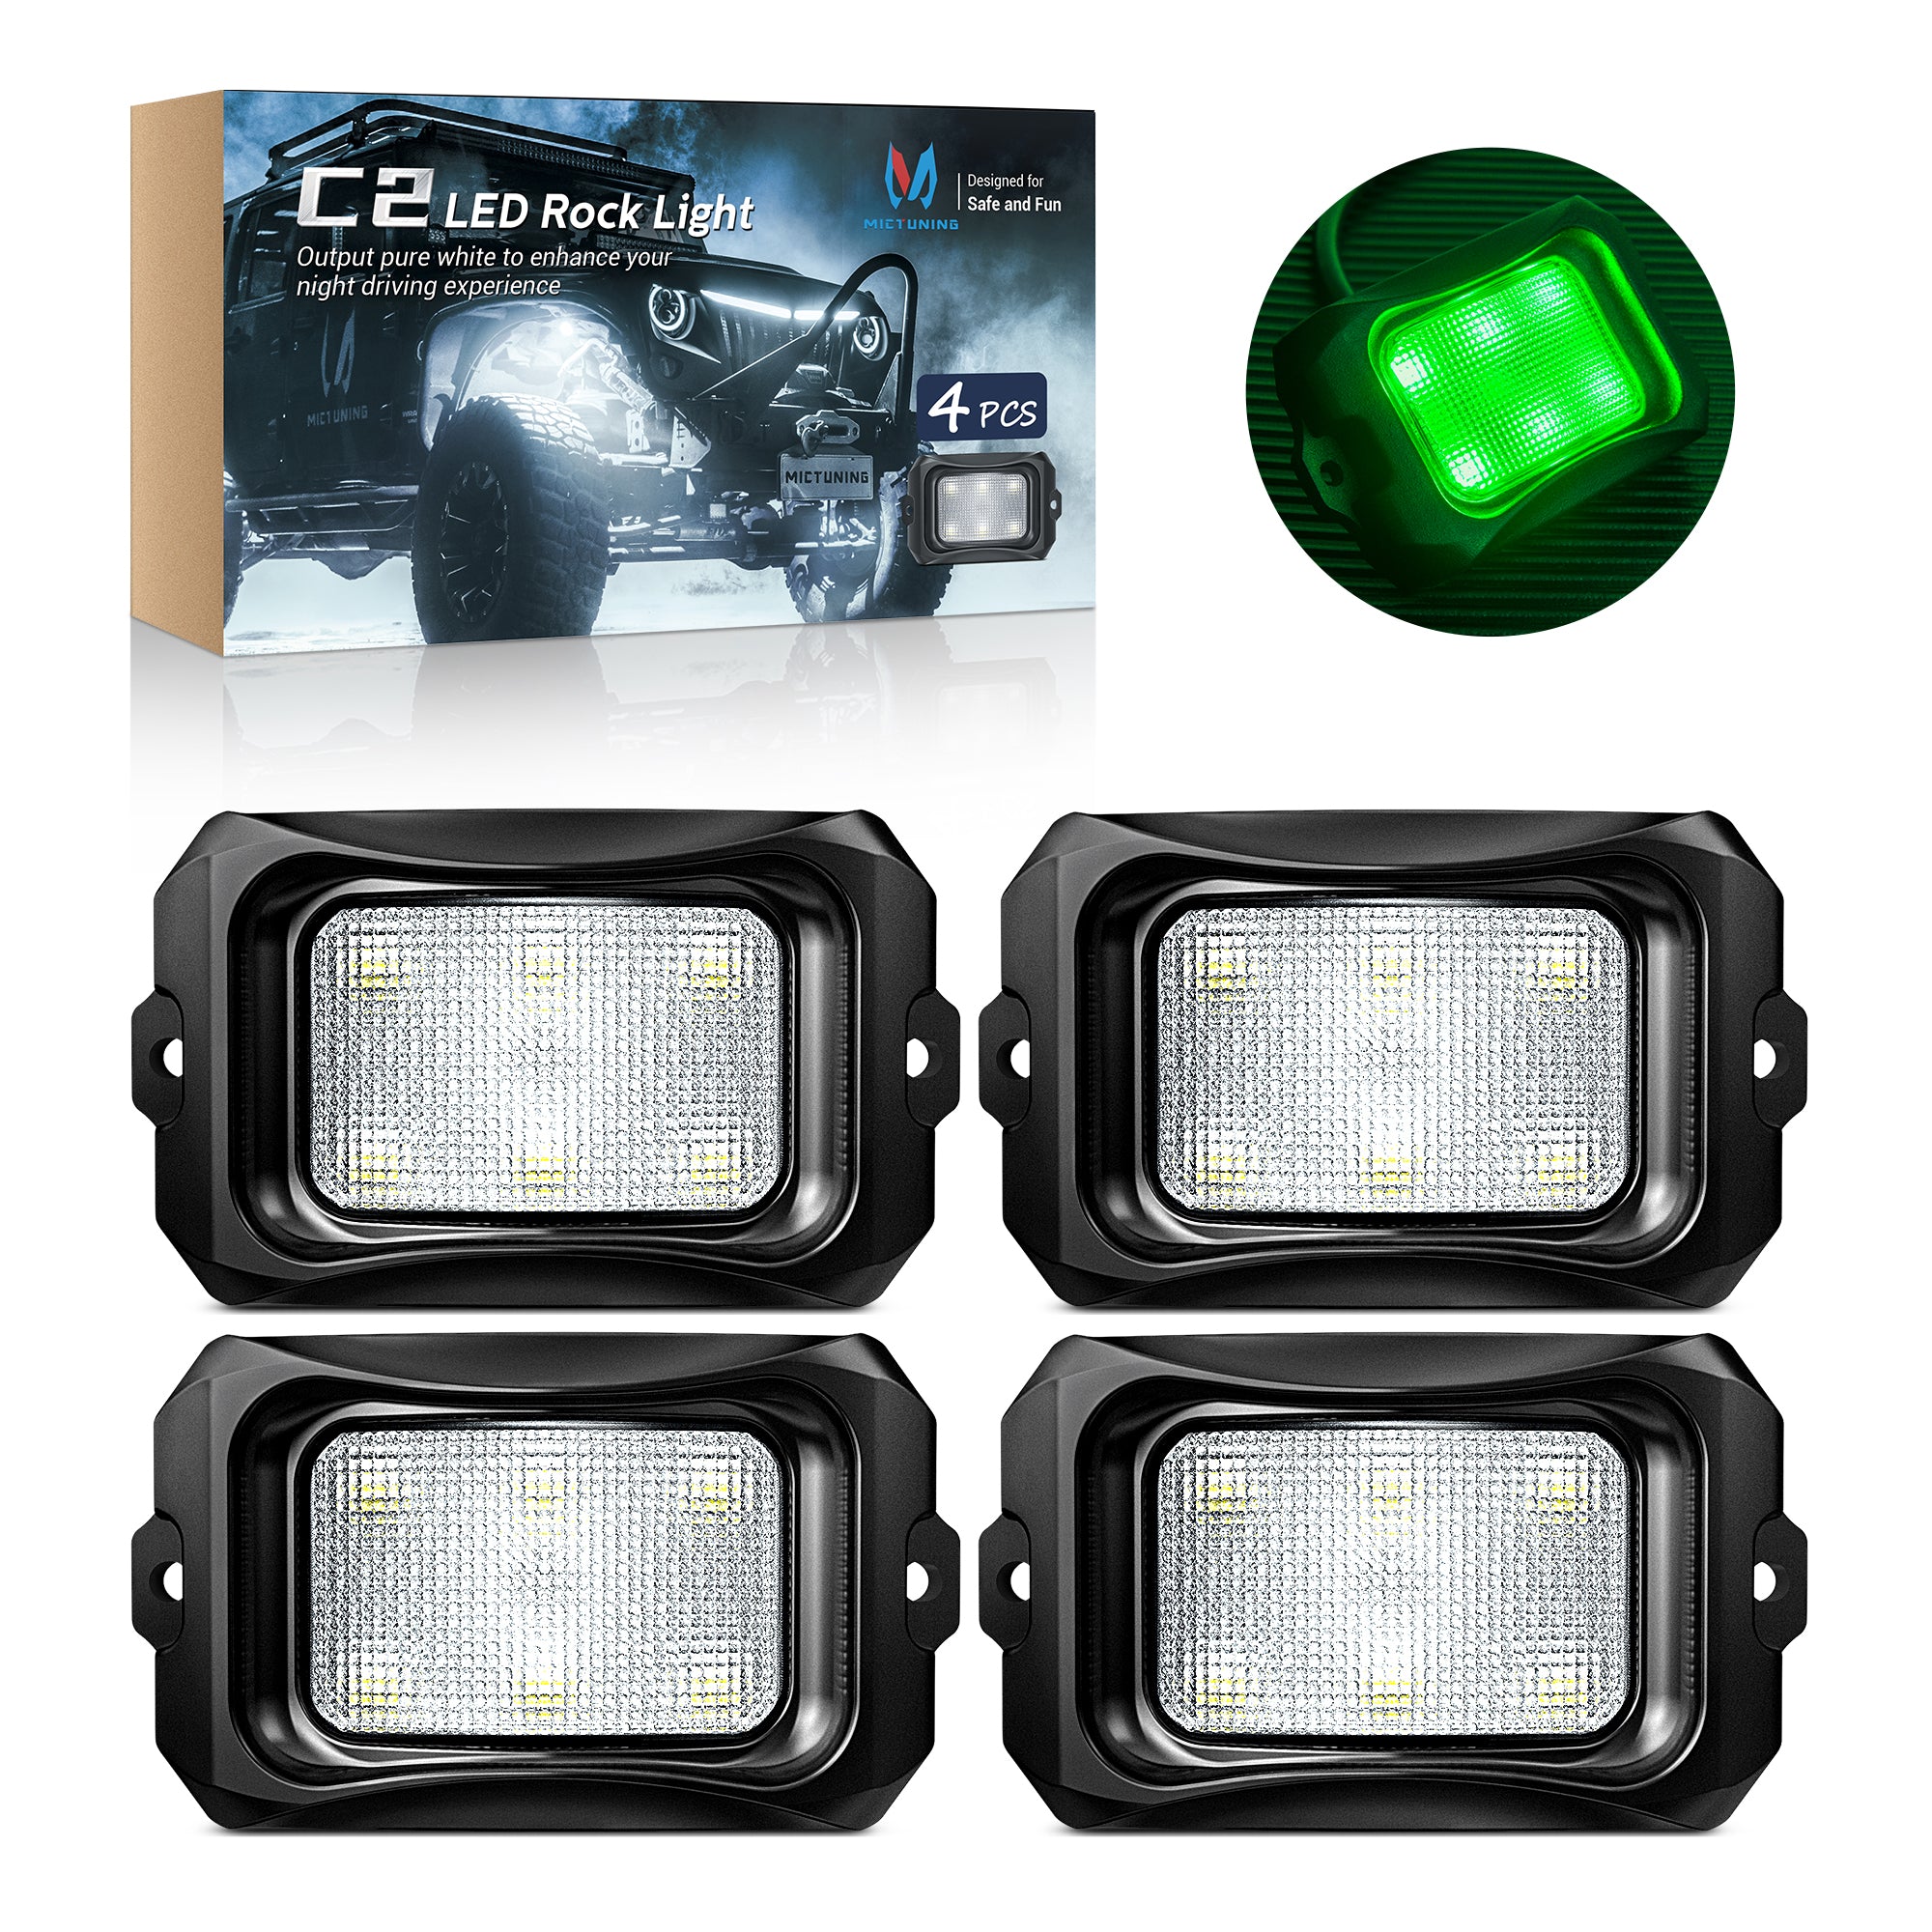 C2 Green LED Rock Lights, 4 Pods Neon Underglow Light Kits Waterproof Underbody Glow Lamp